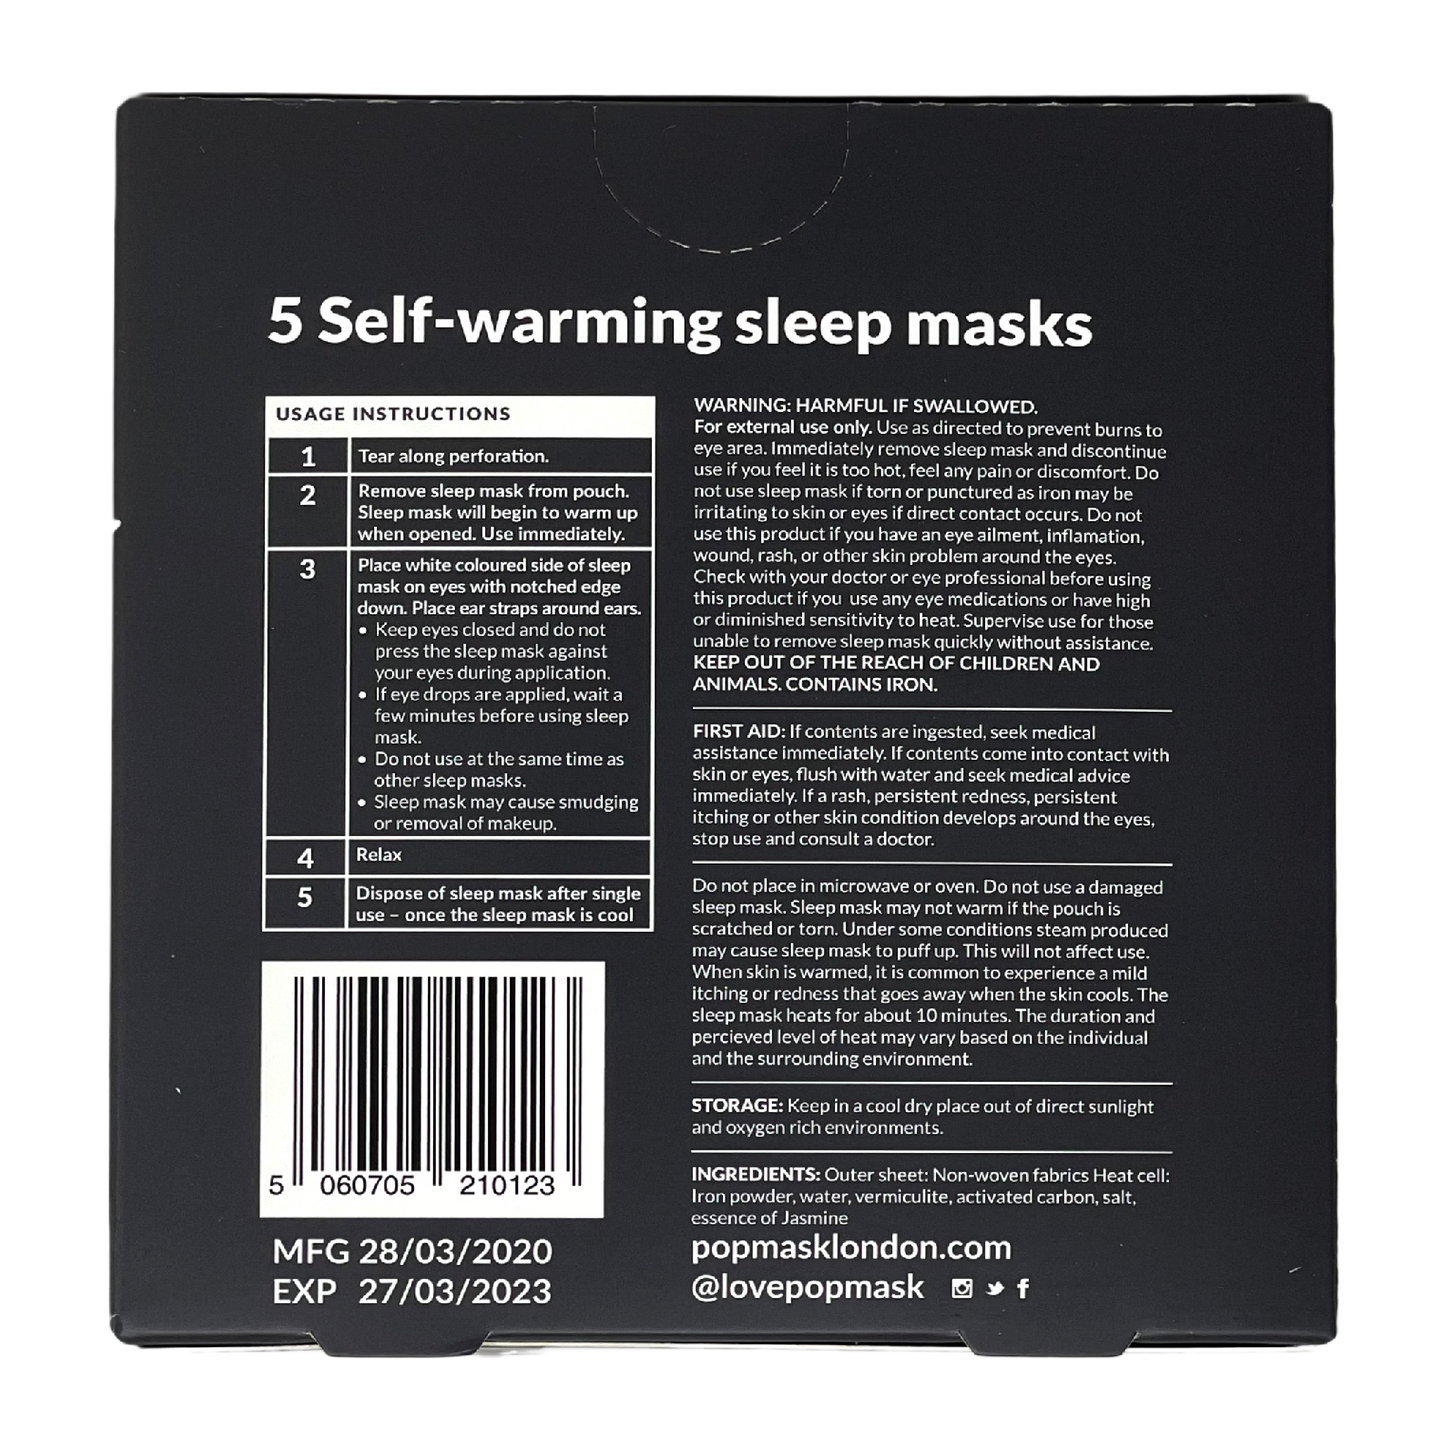 Jet Setter Jasmine Scented Self-warming Sleep Masks